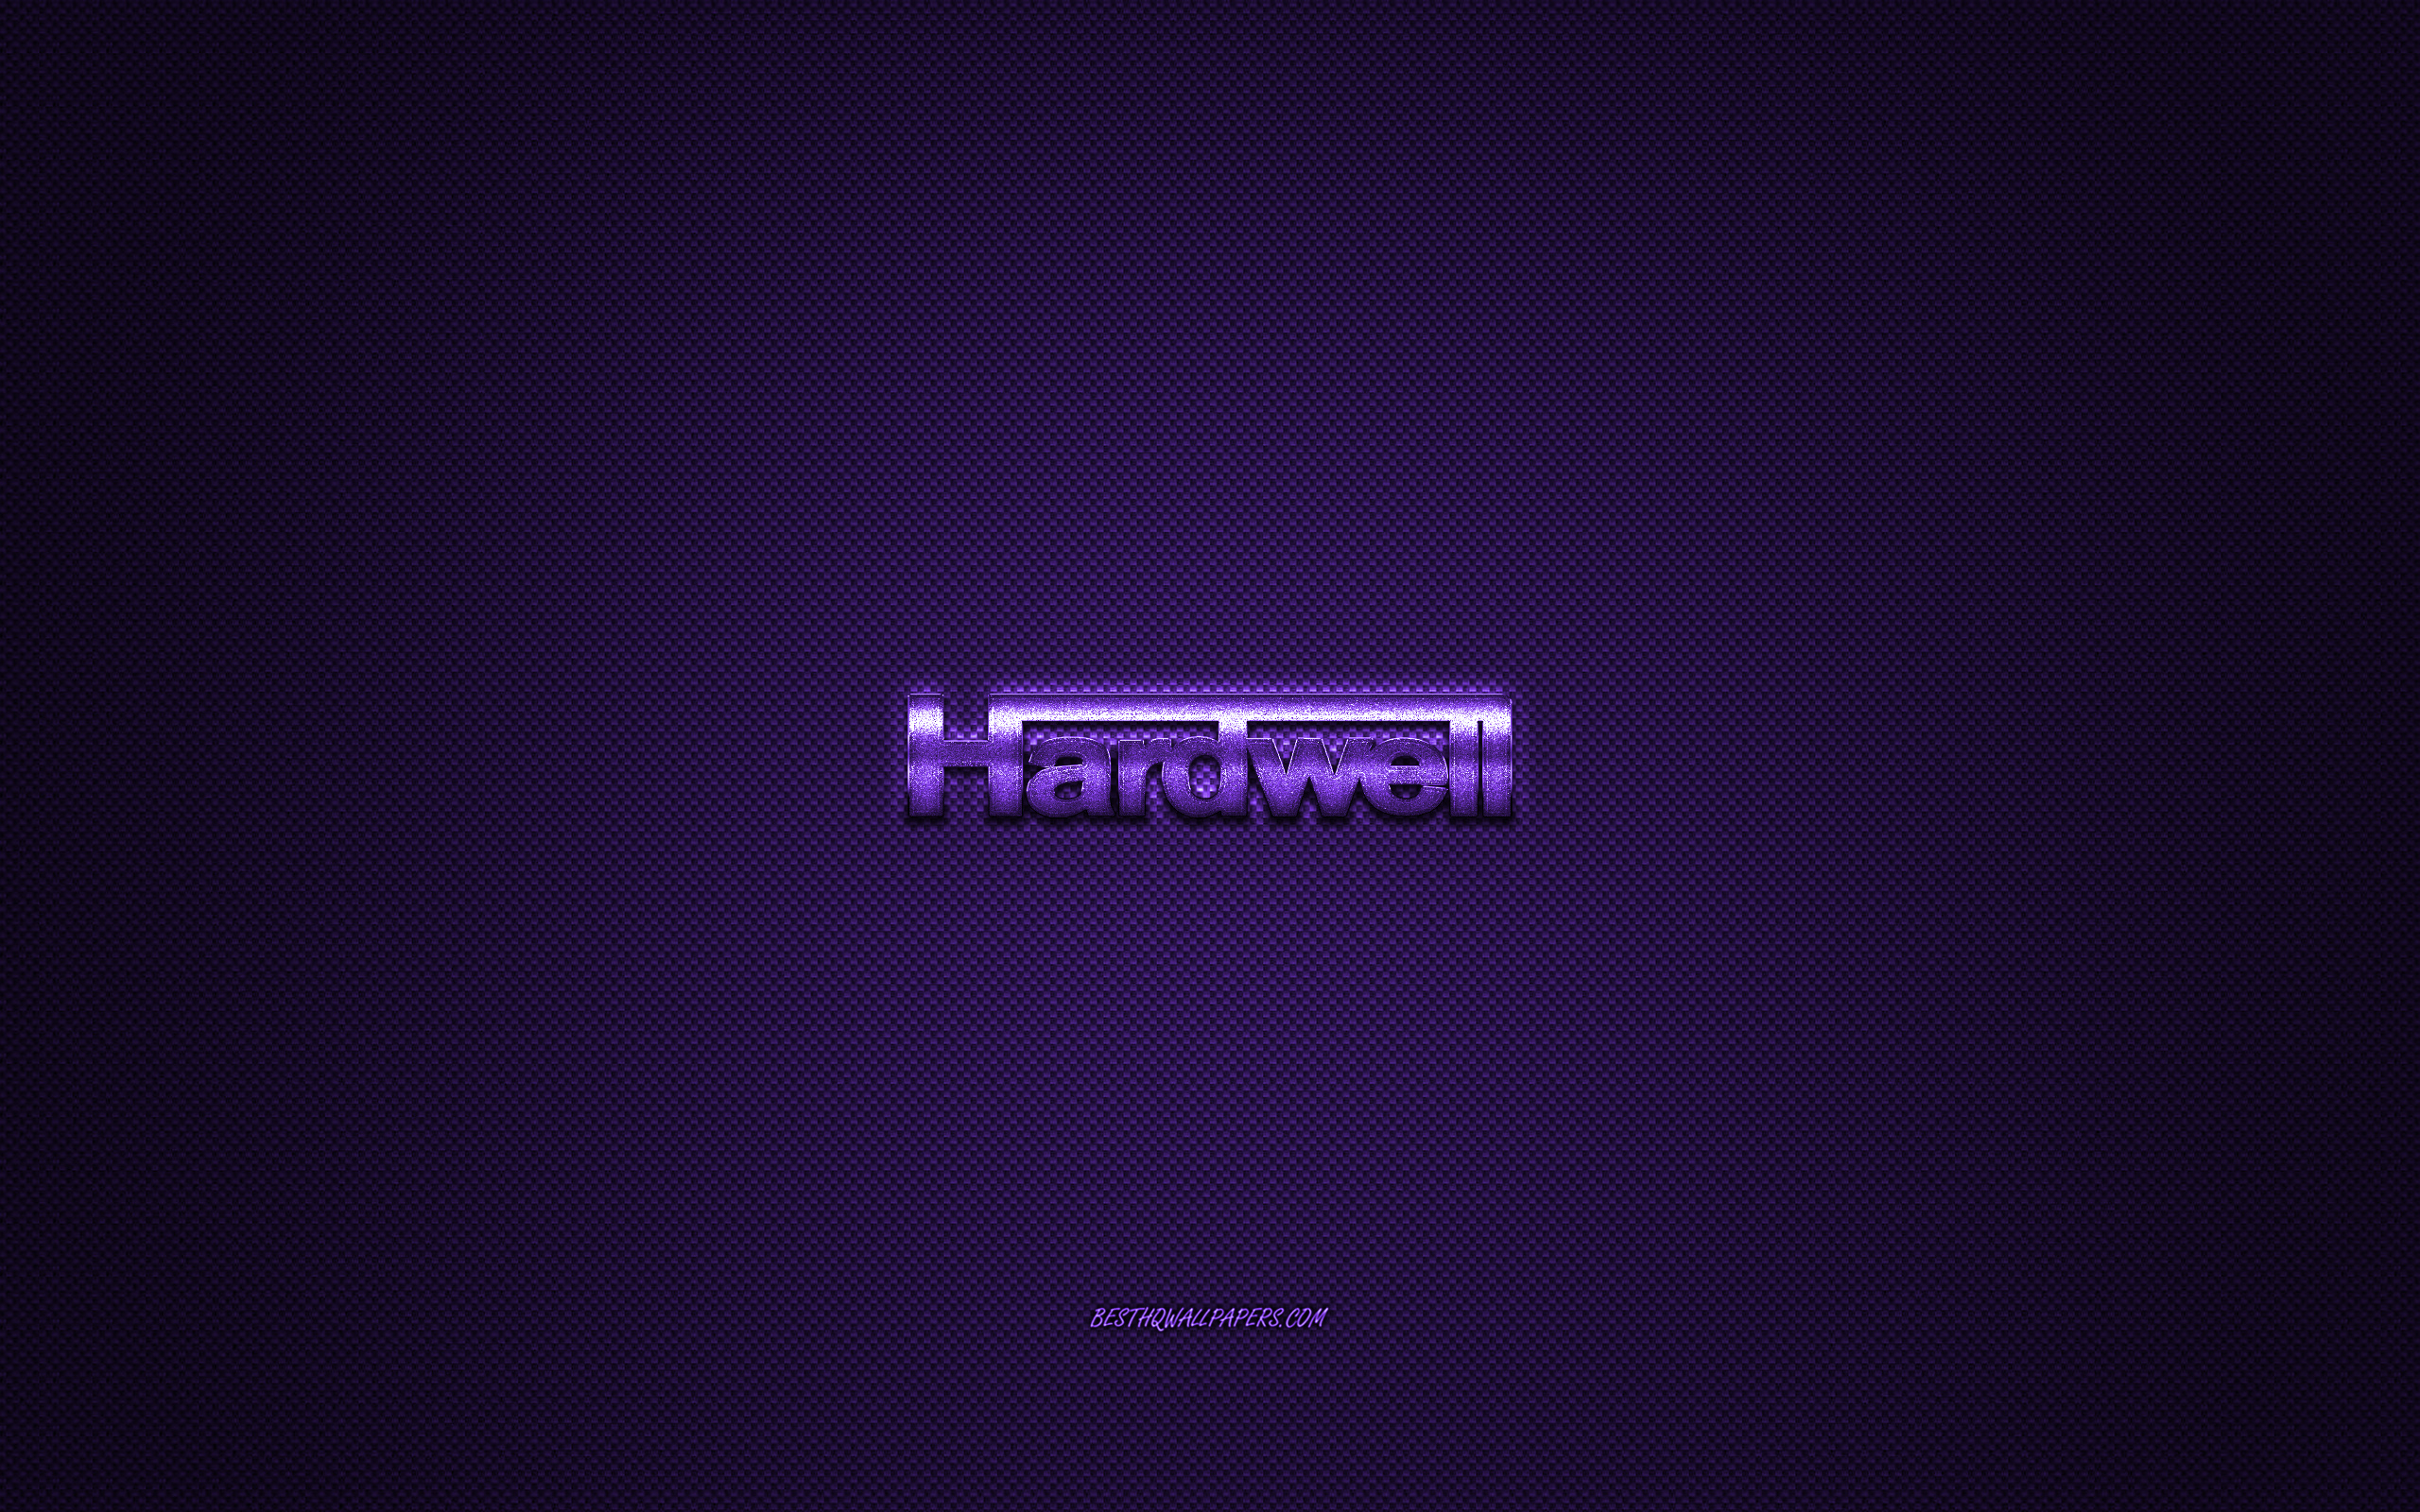 Download wallpaper Hardwell logo, purple shiny logo, Hardwell metal emblem, Dutch DJ, Robbert van de Corput, purple carbon fiber texture, Hardwell, brands, creative art for desktop with resolution 2560x1600. High Quality HD